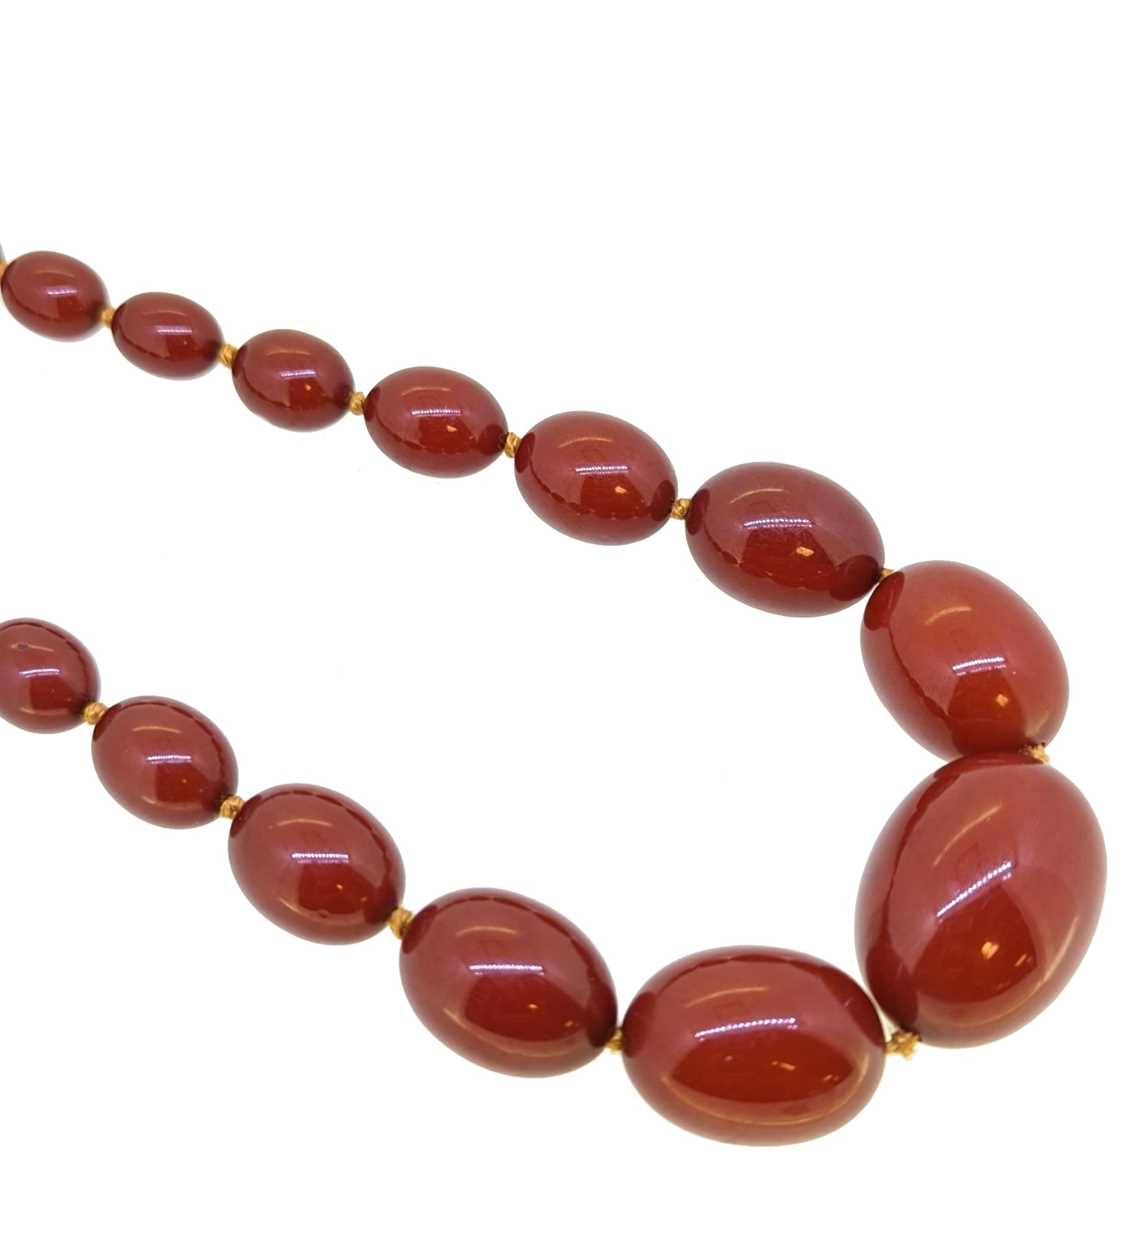 A bakelite bead necklace,